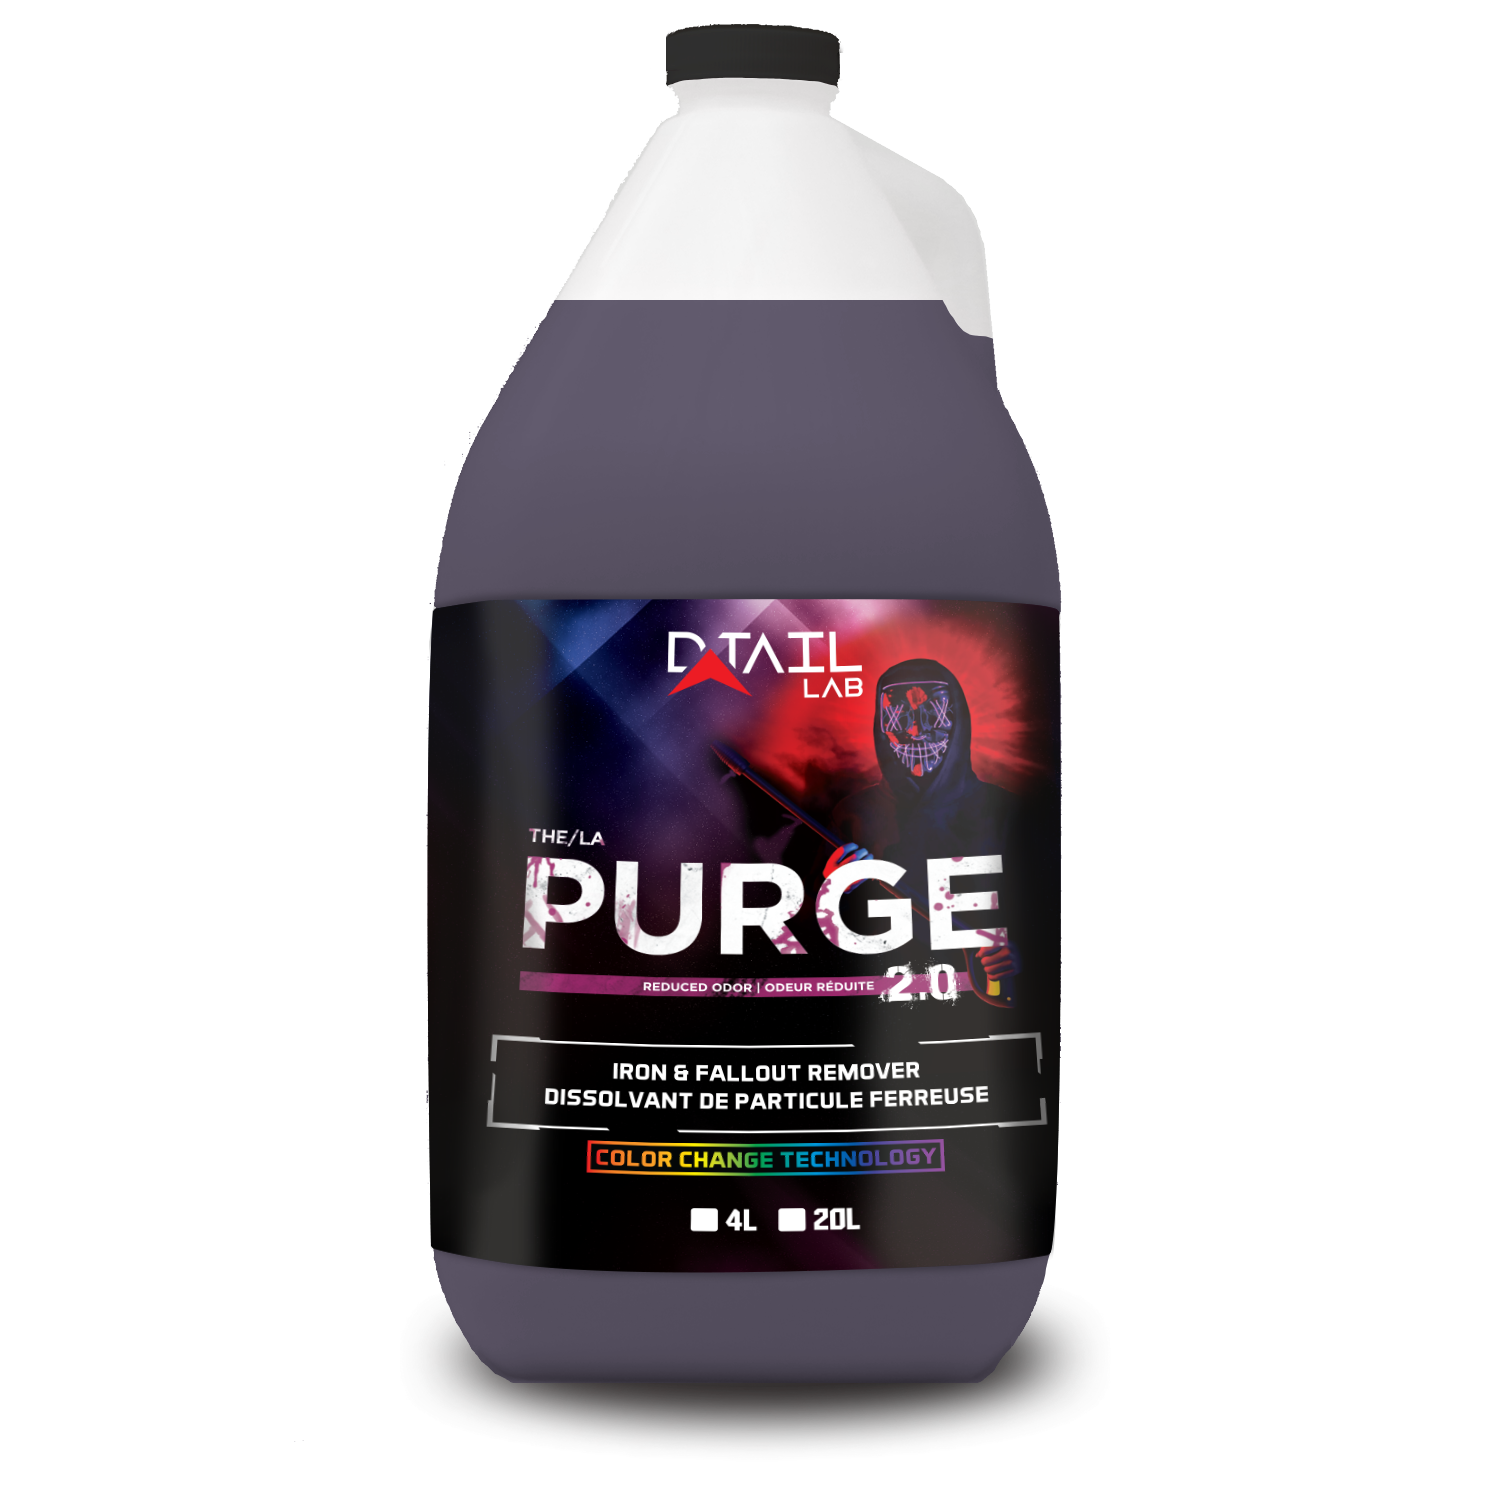 D-TAIL LAB PURGE pH 中性除铁剂